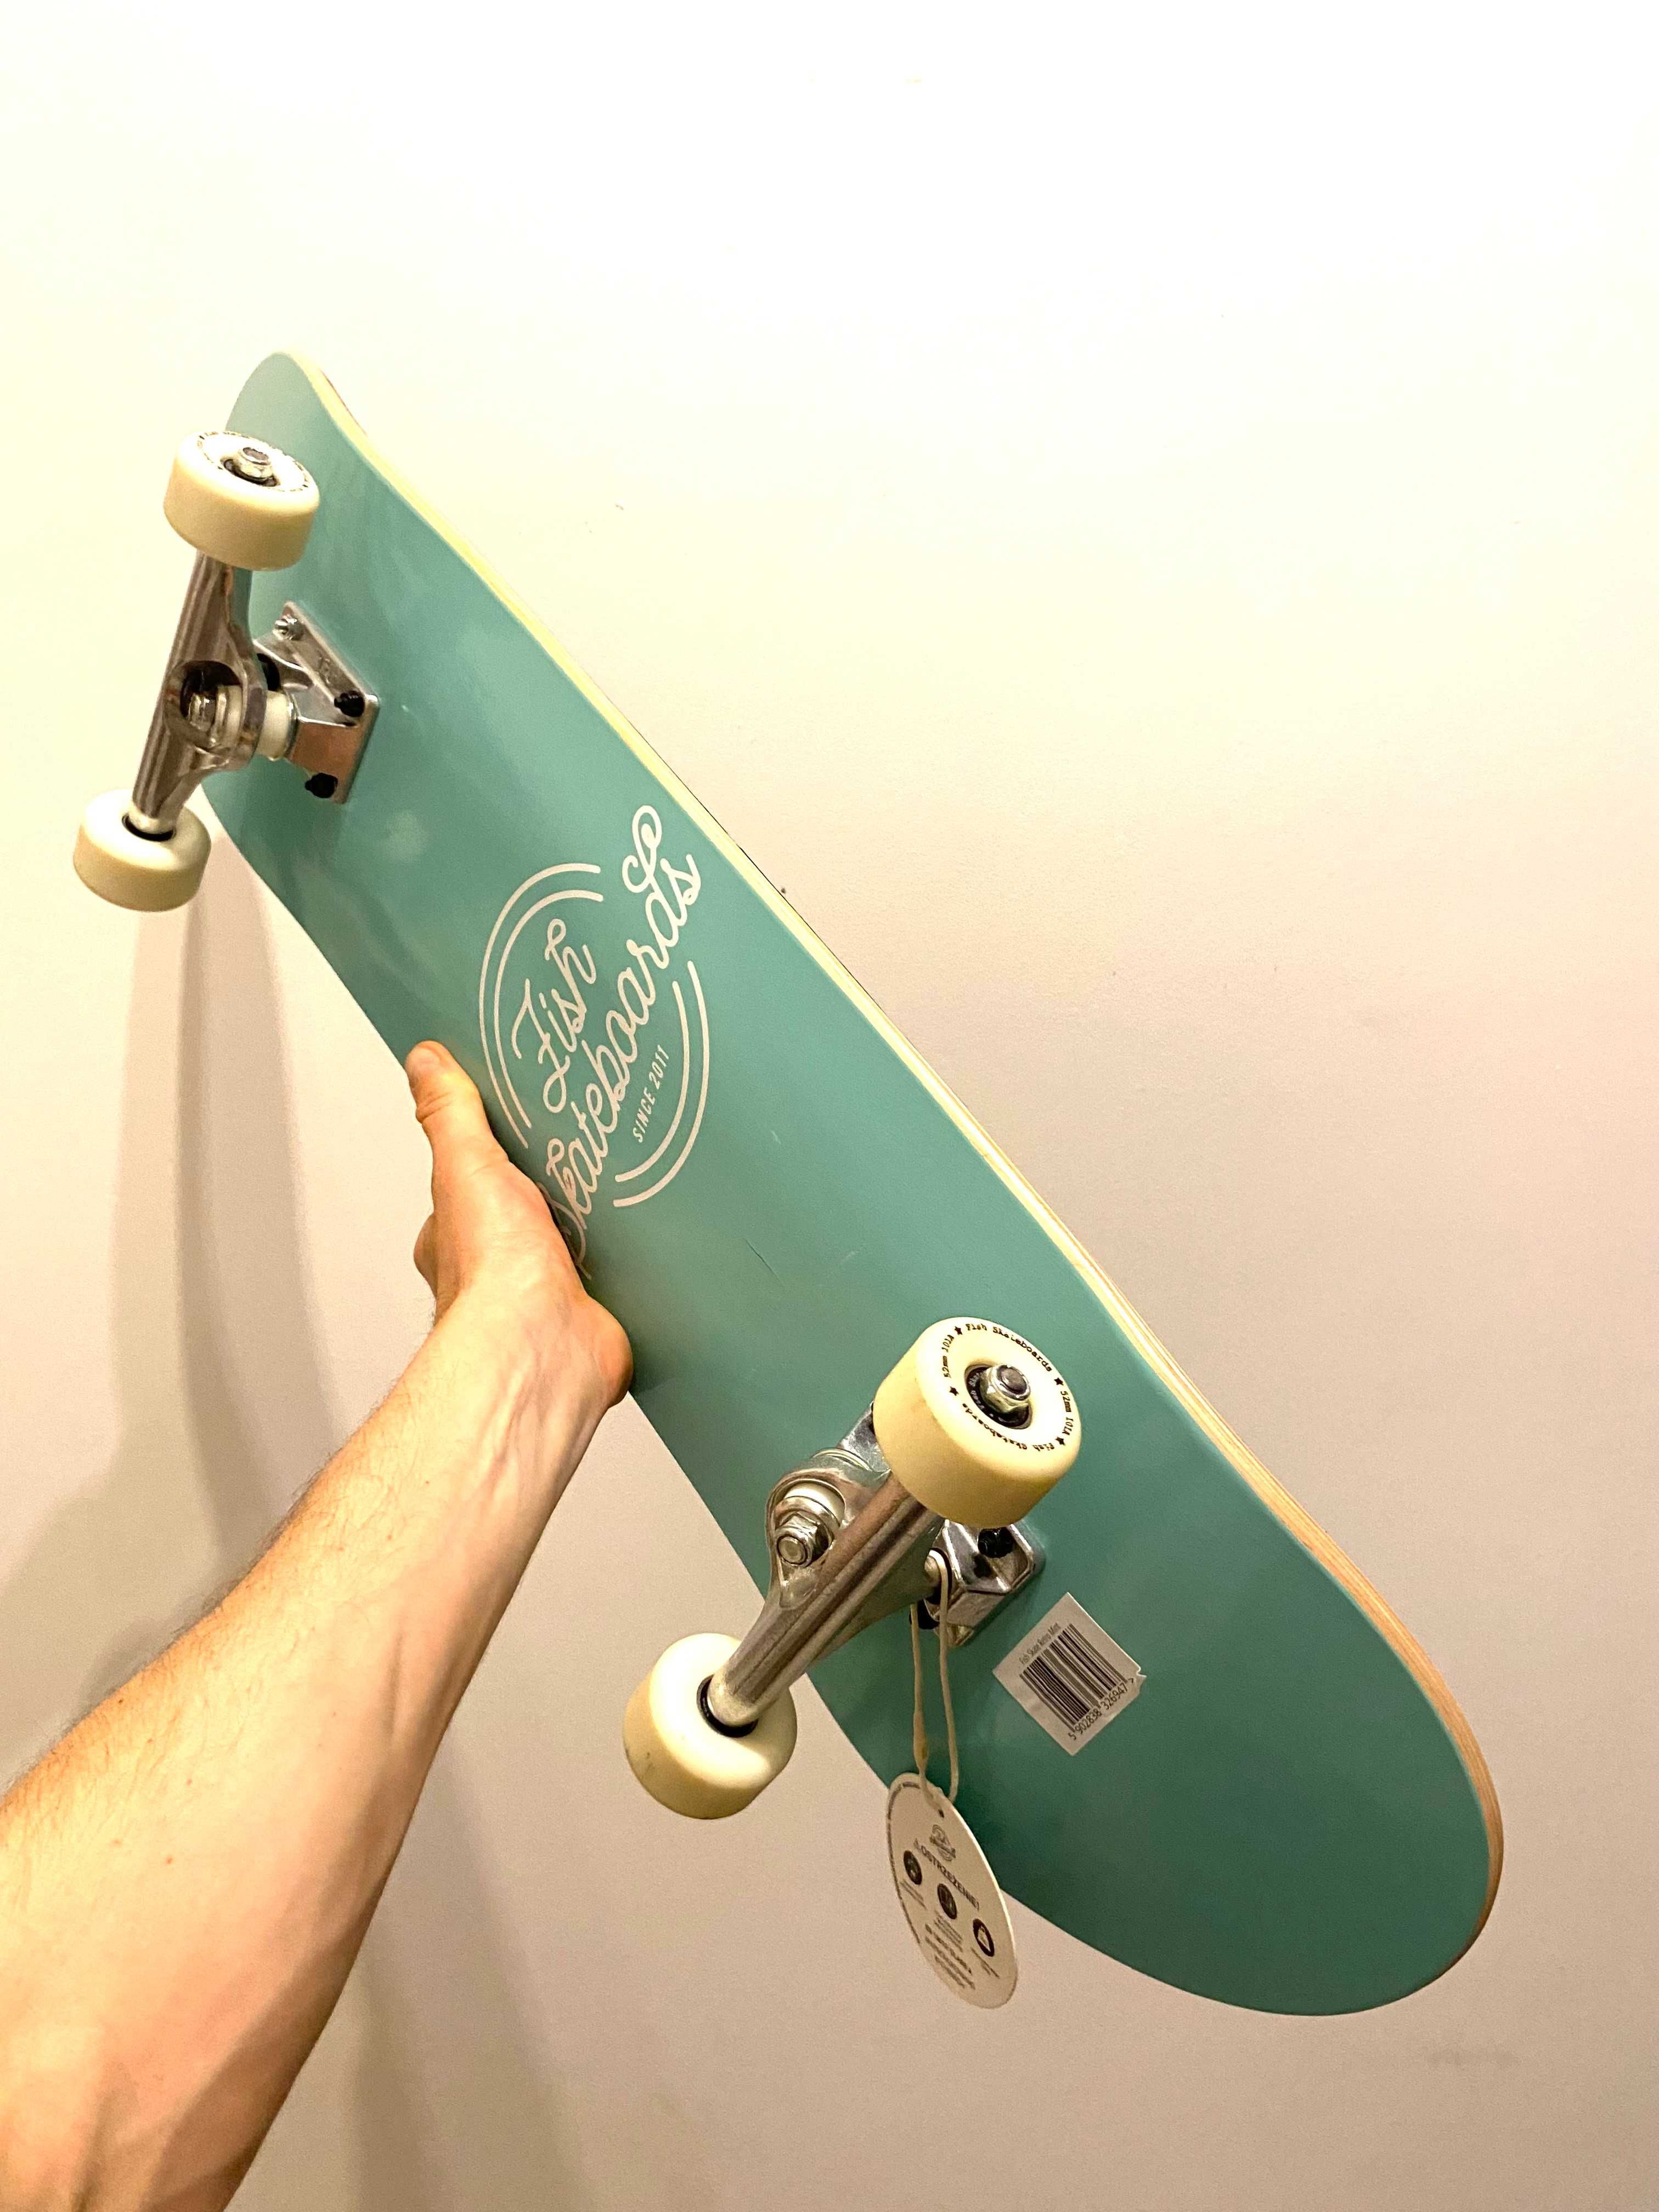 Nowa kompletna deskorolka Fish Skateboards 8.0 -dla każdego! sk8 deska